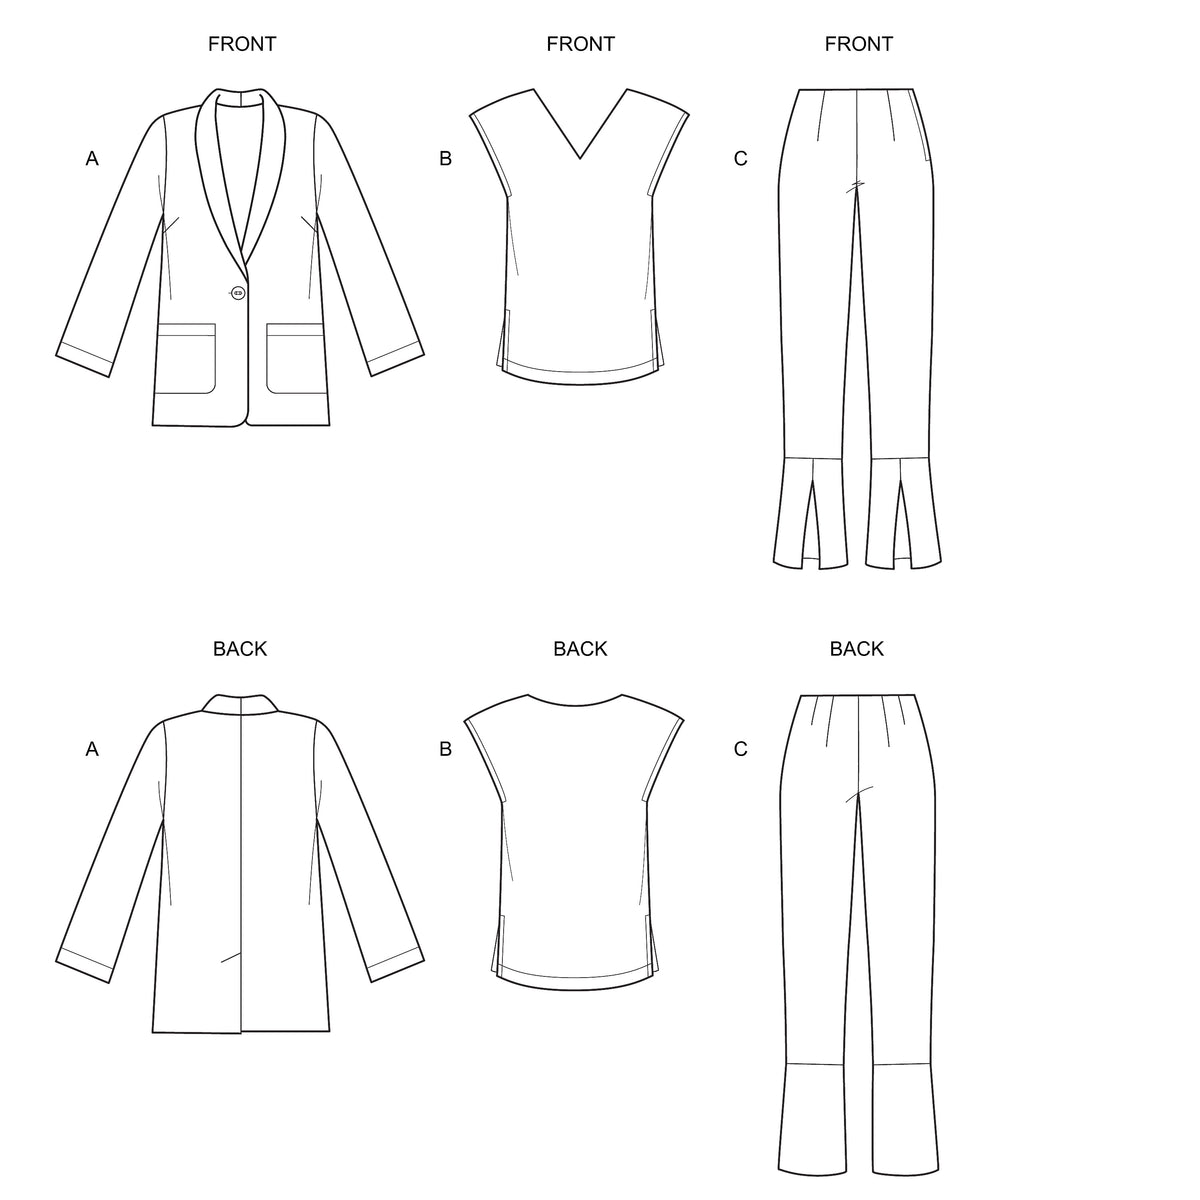 6645 New Look Sewing Pattern N6645 Misses' Jacket, Top and Pants